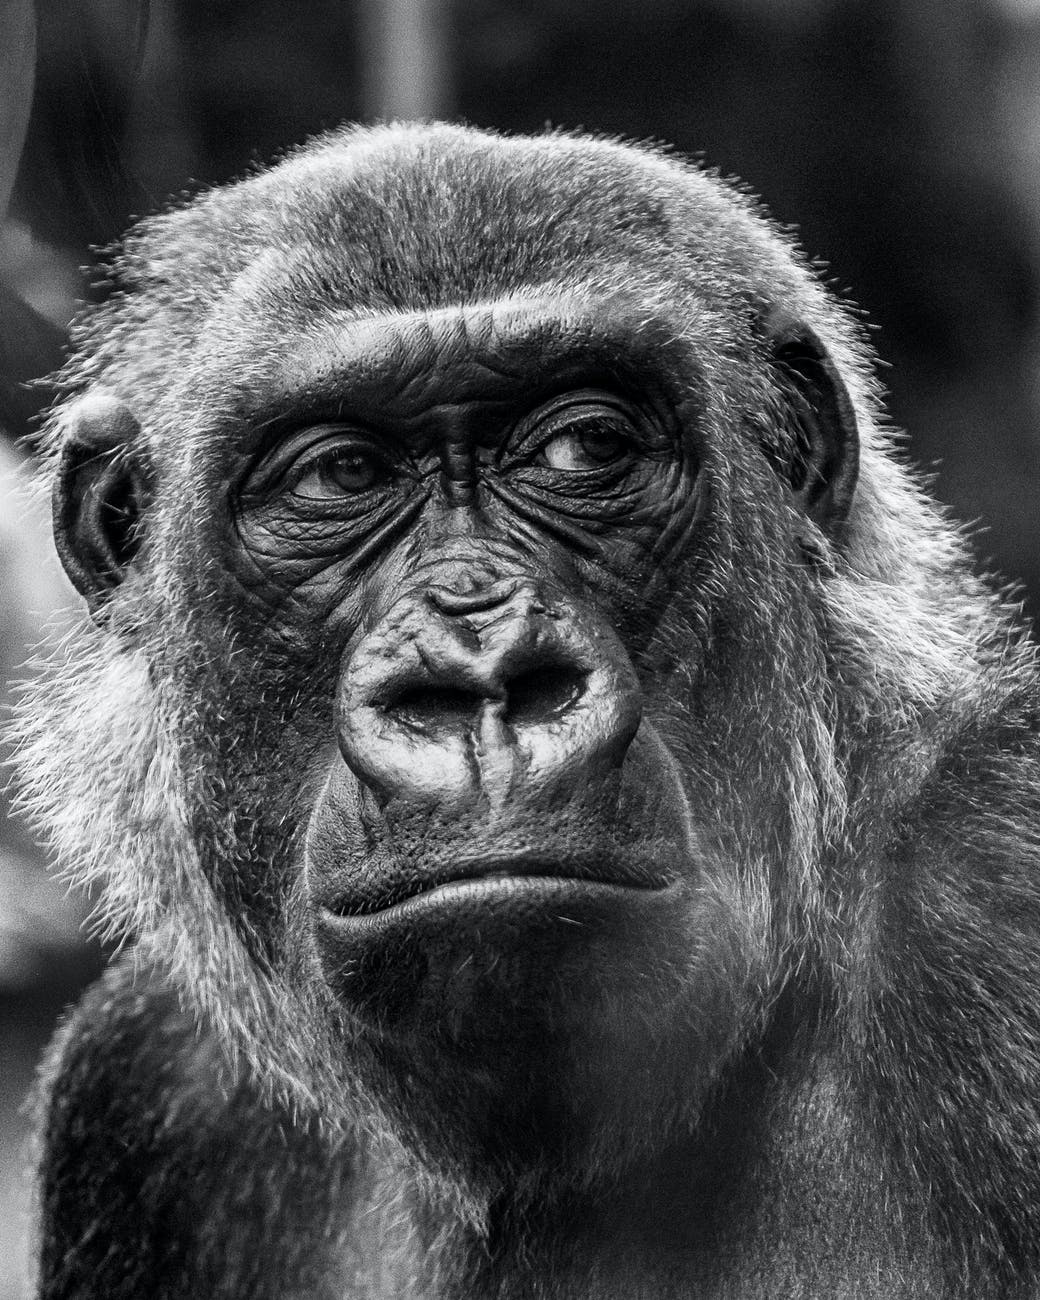 animal portrait of a gorilla